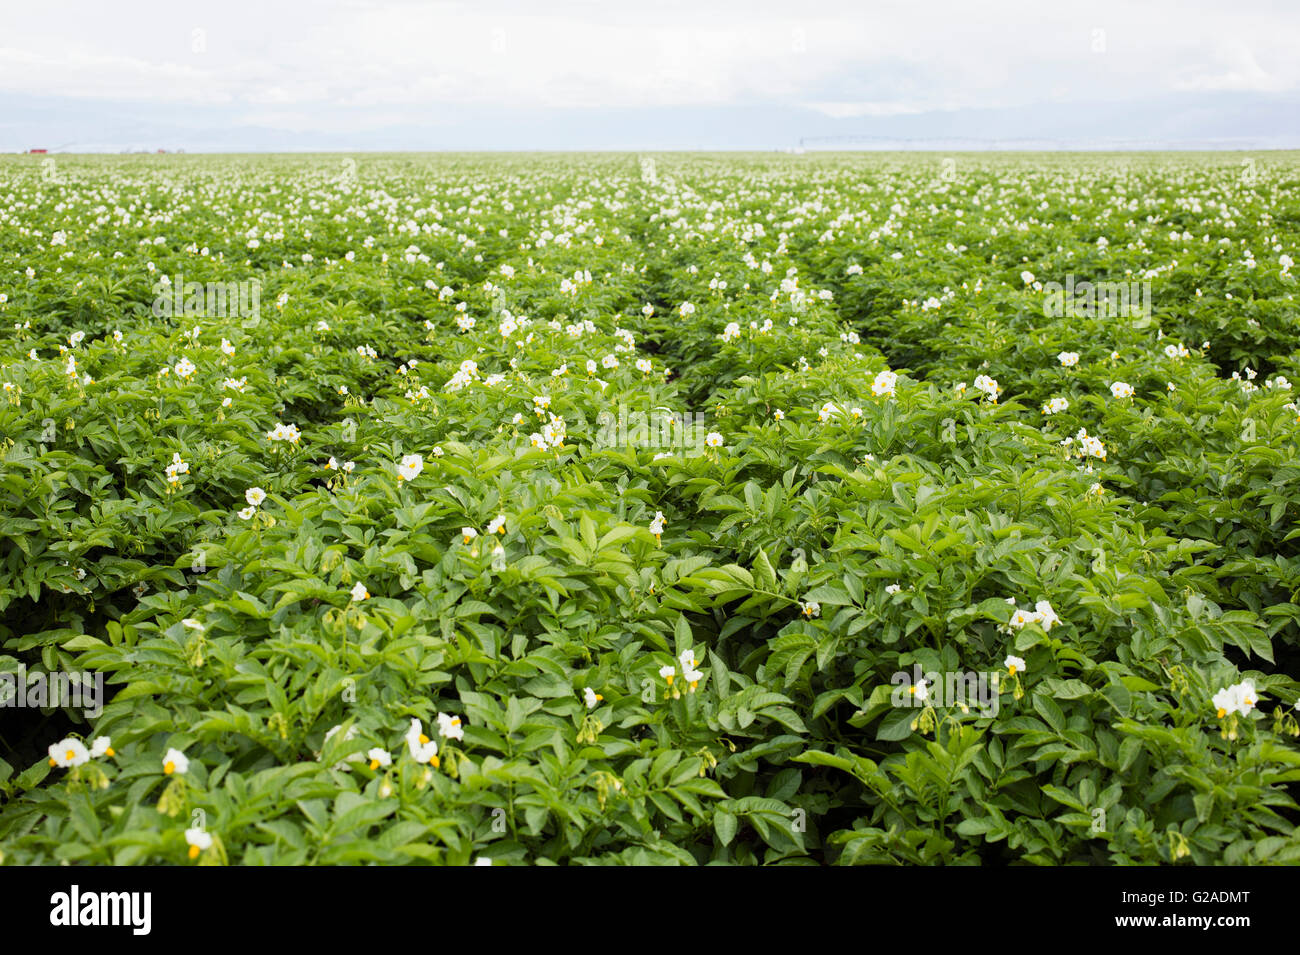 Rows of flowering potato plants Stock Photo